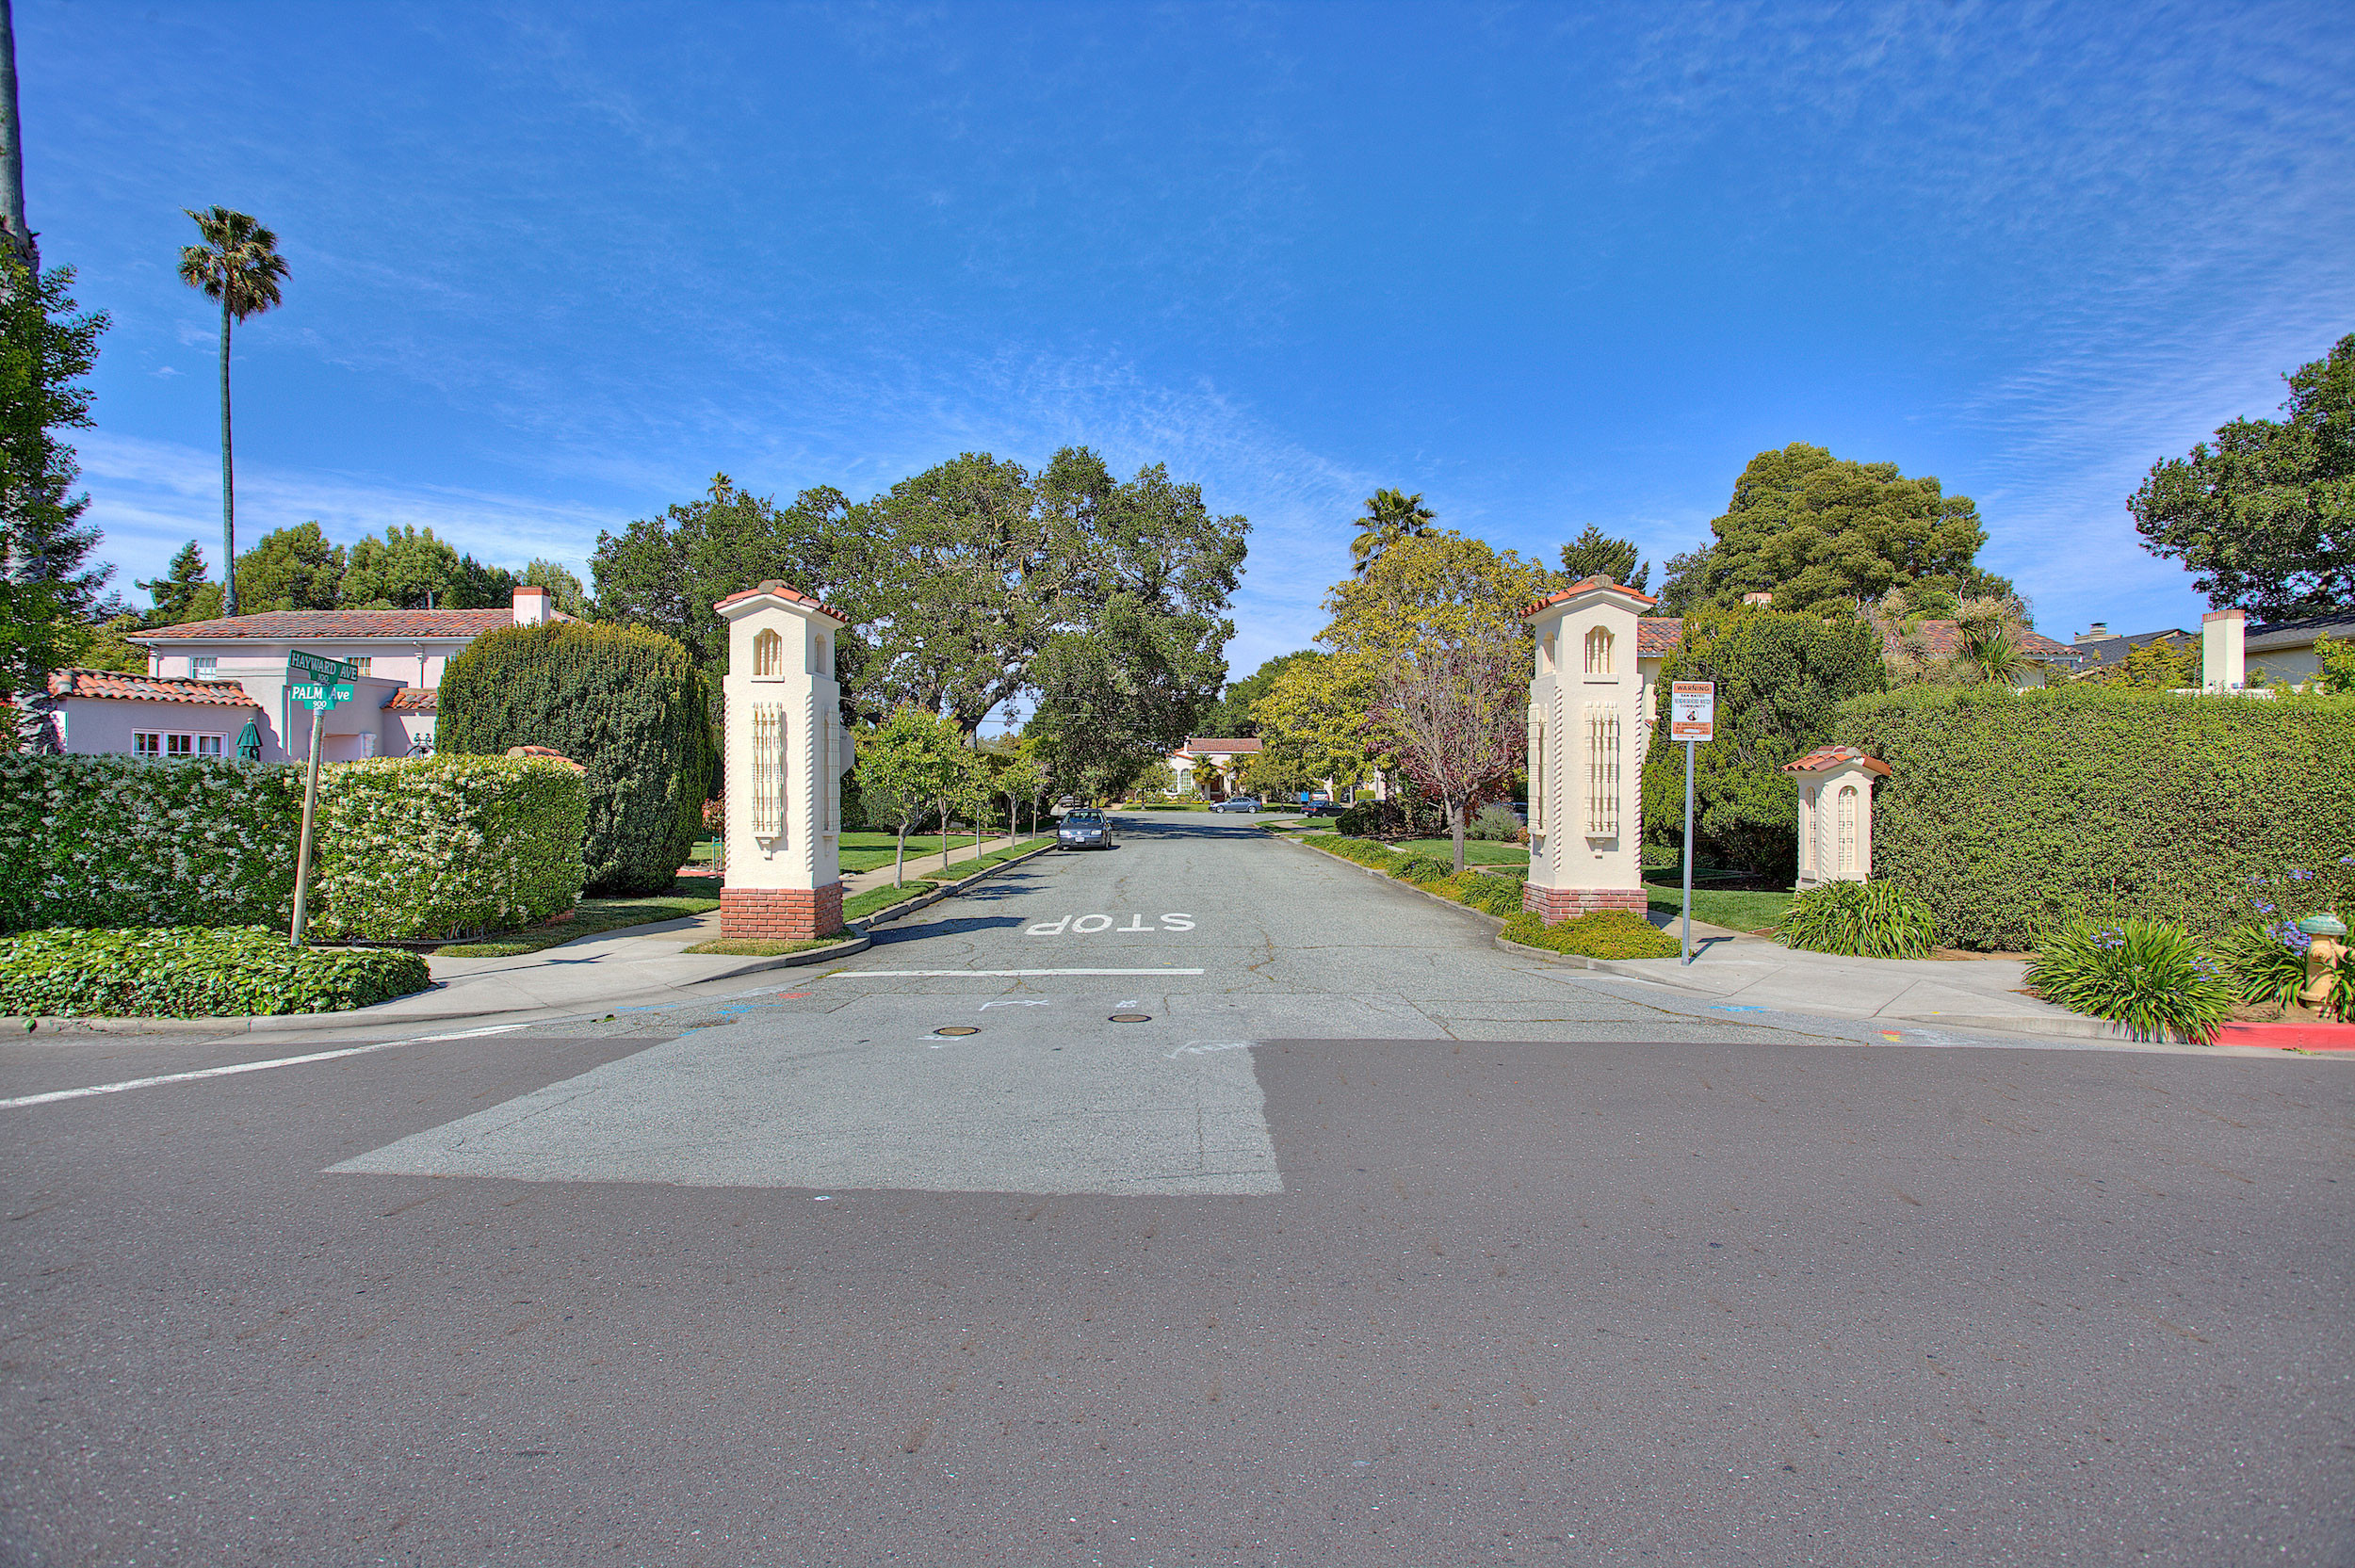 Entrance to the Haywood Park neighborhood in San Mateo